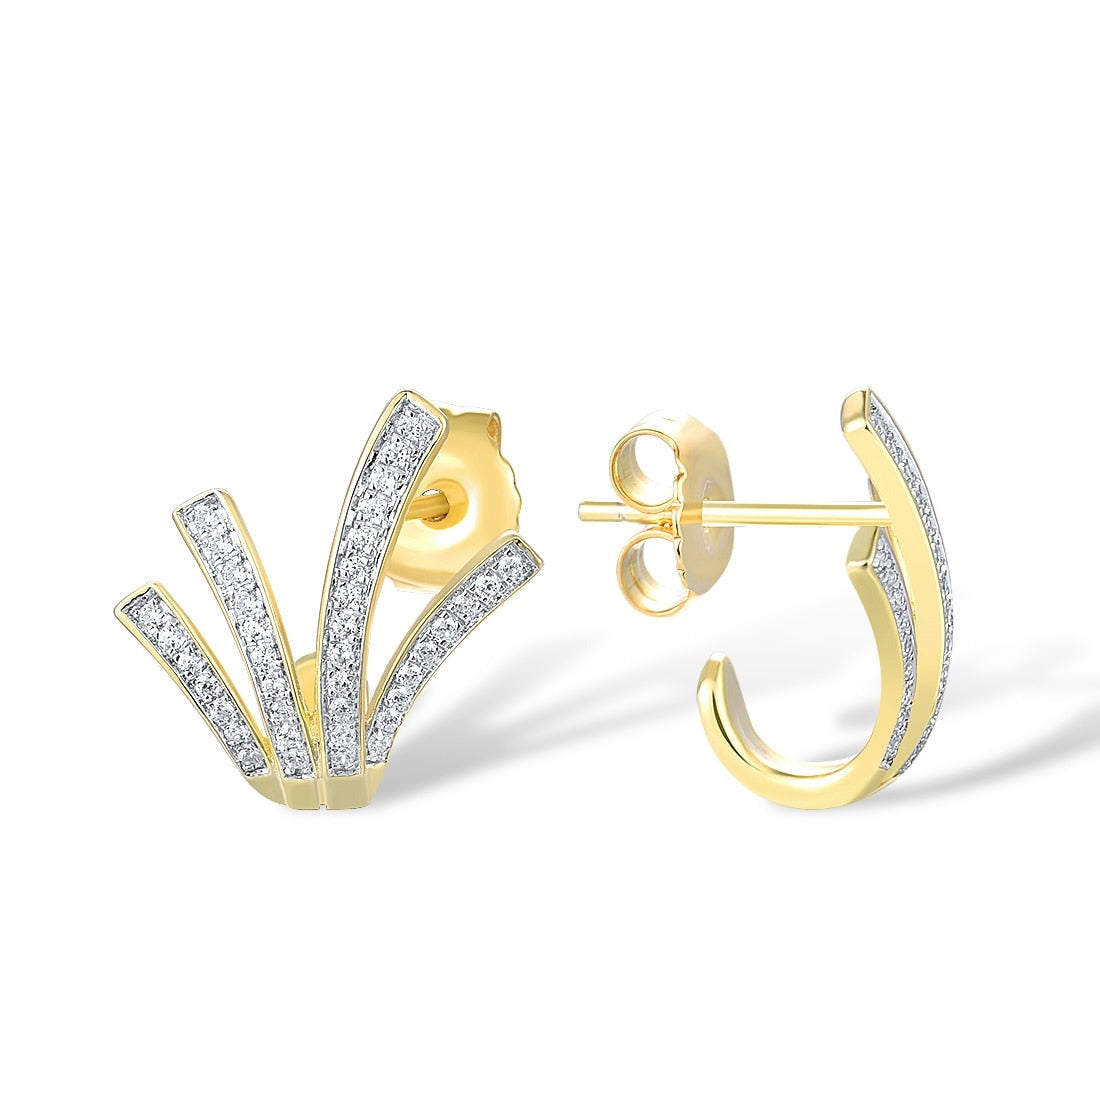 Natural Diamond Earrings. 14K Yellow Gold. Diamond Stud Earrings.